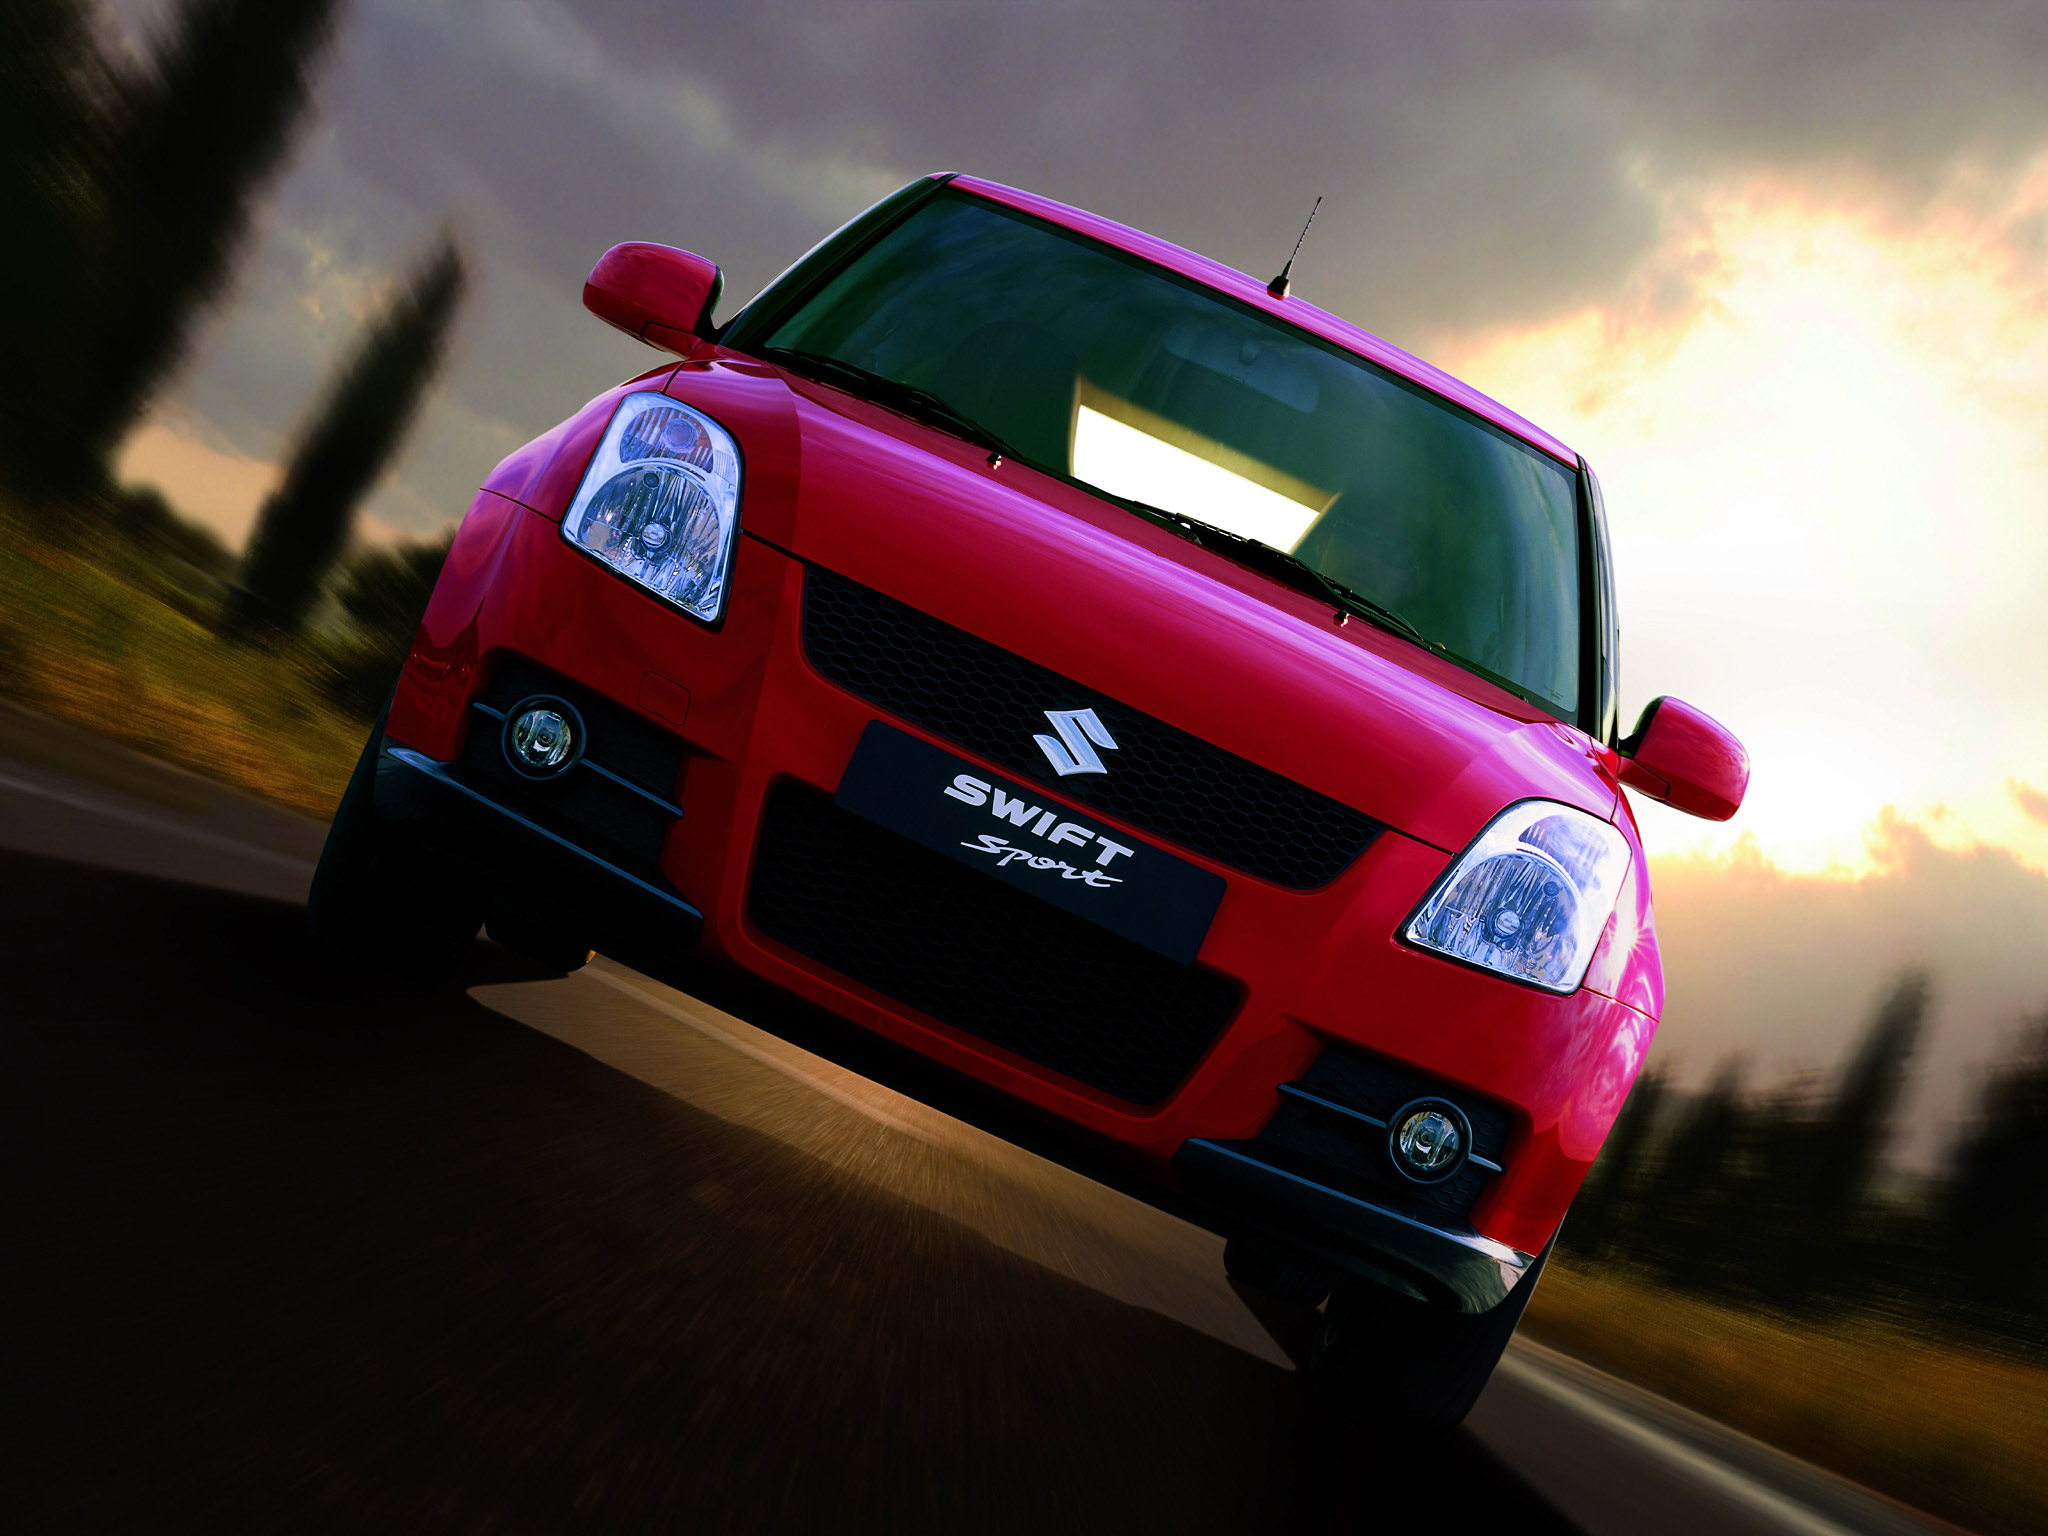  2005 Suzuki Swift Sport Wallpaper.